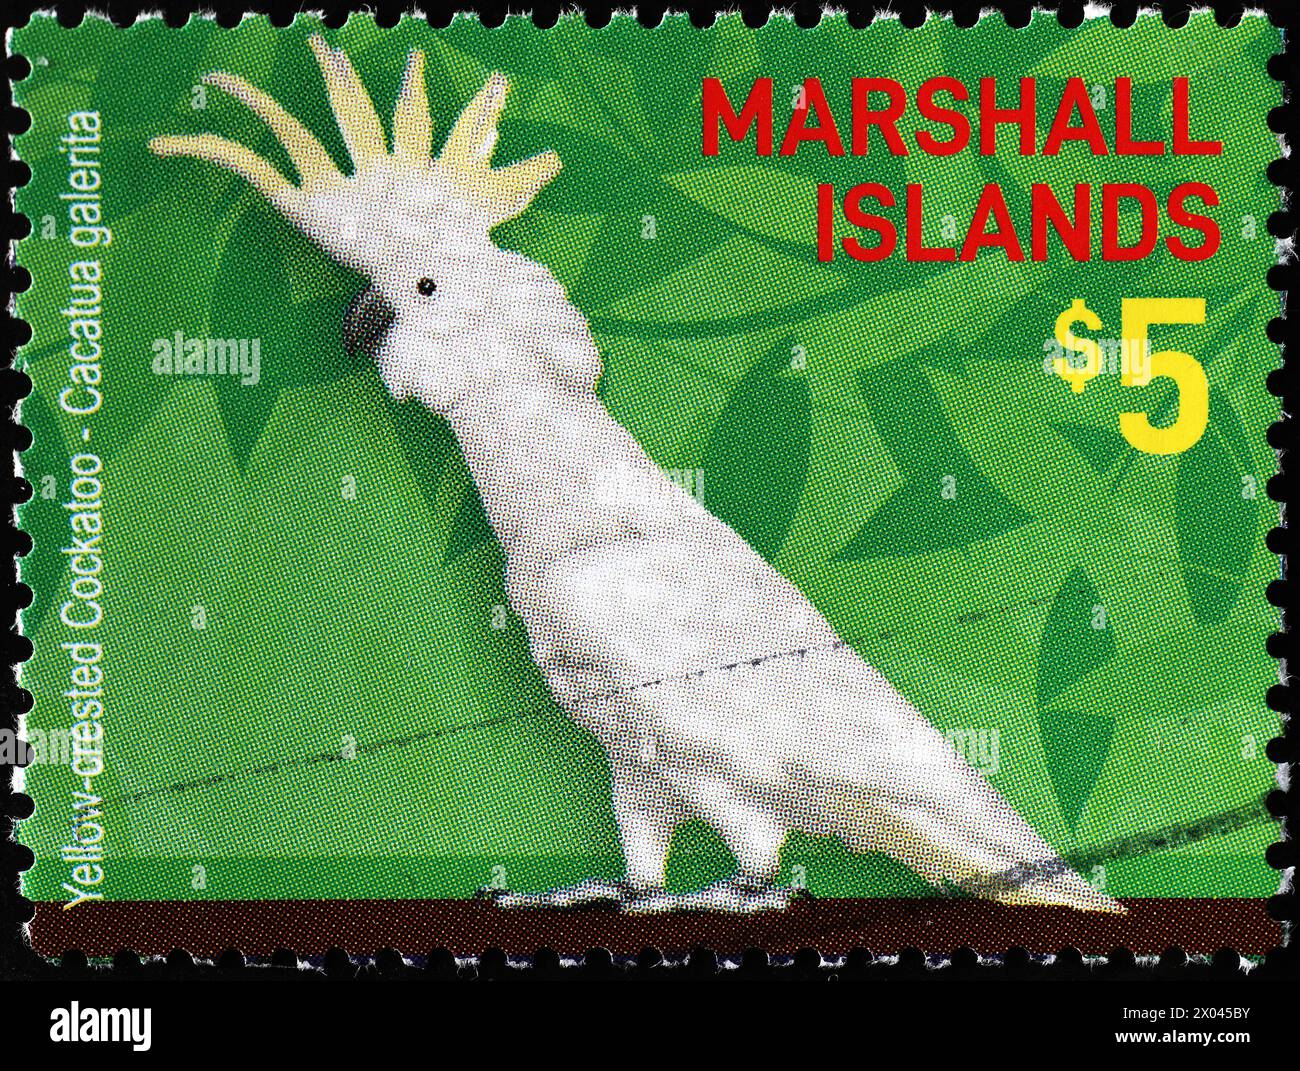 Sulphur-crested cockatoo on stamp of Marshall islands Stock Photo